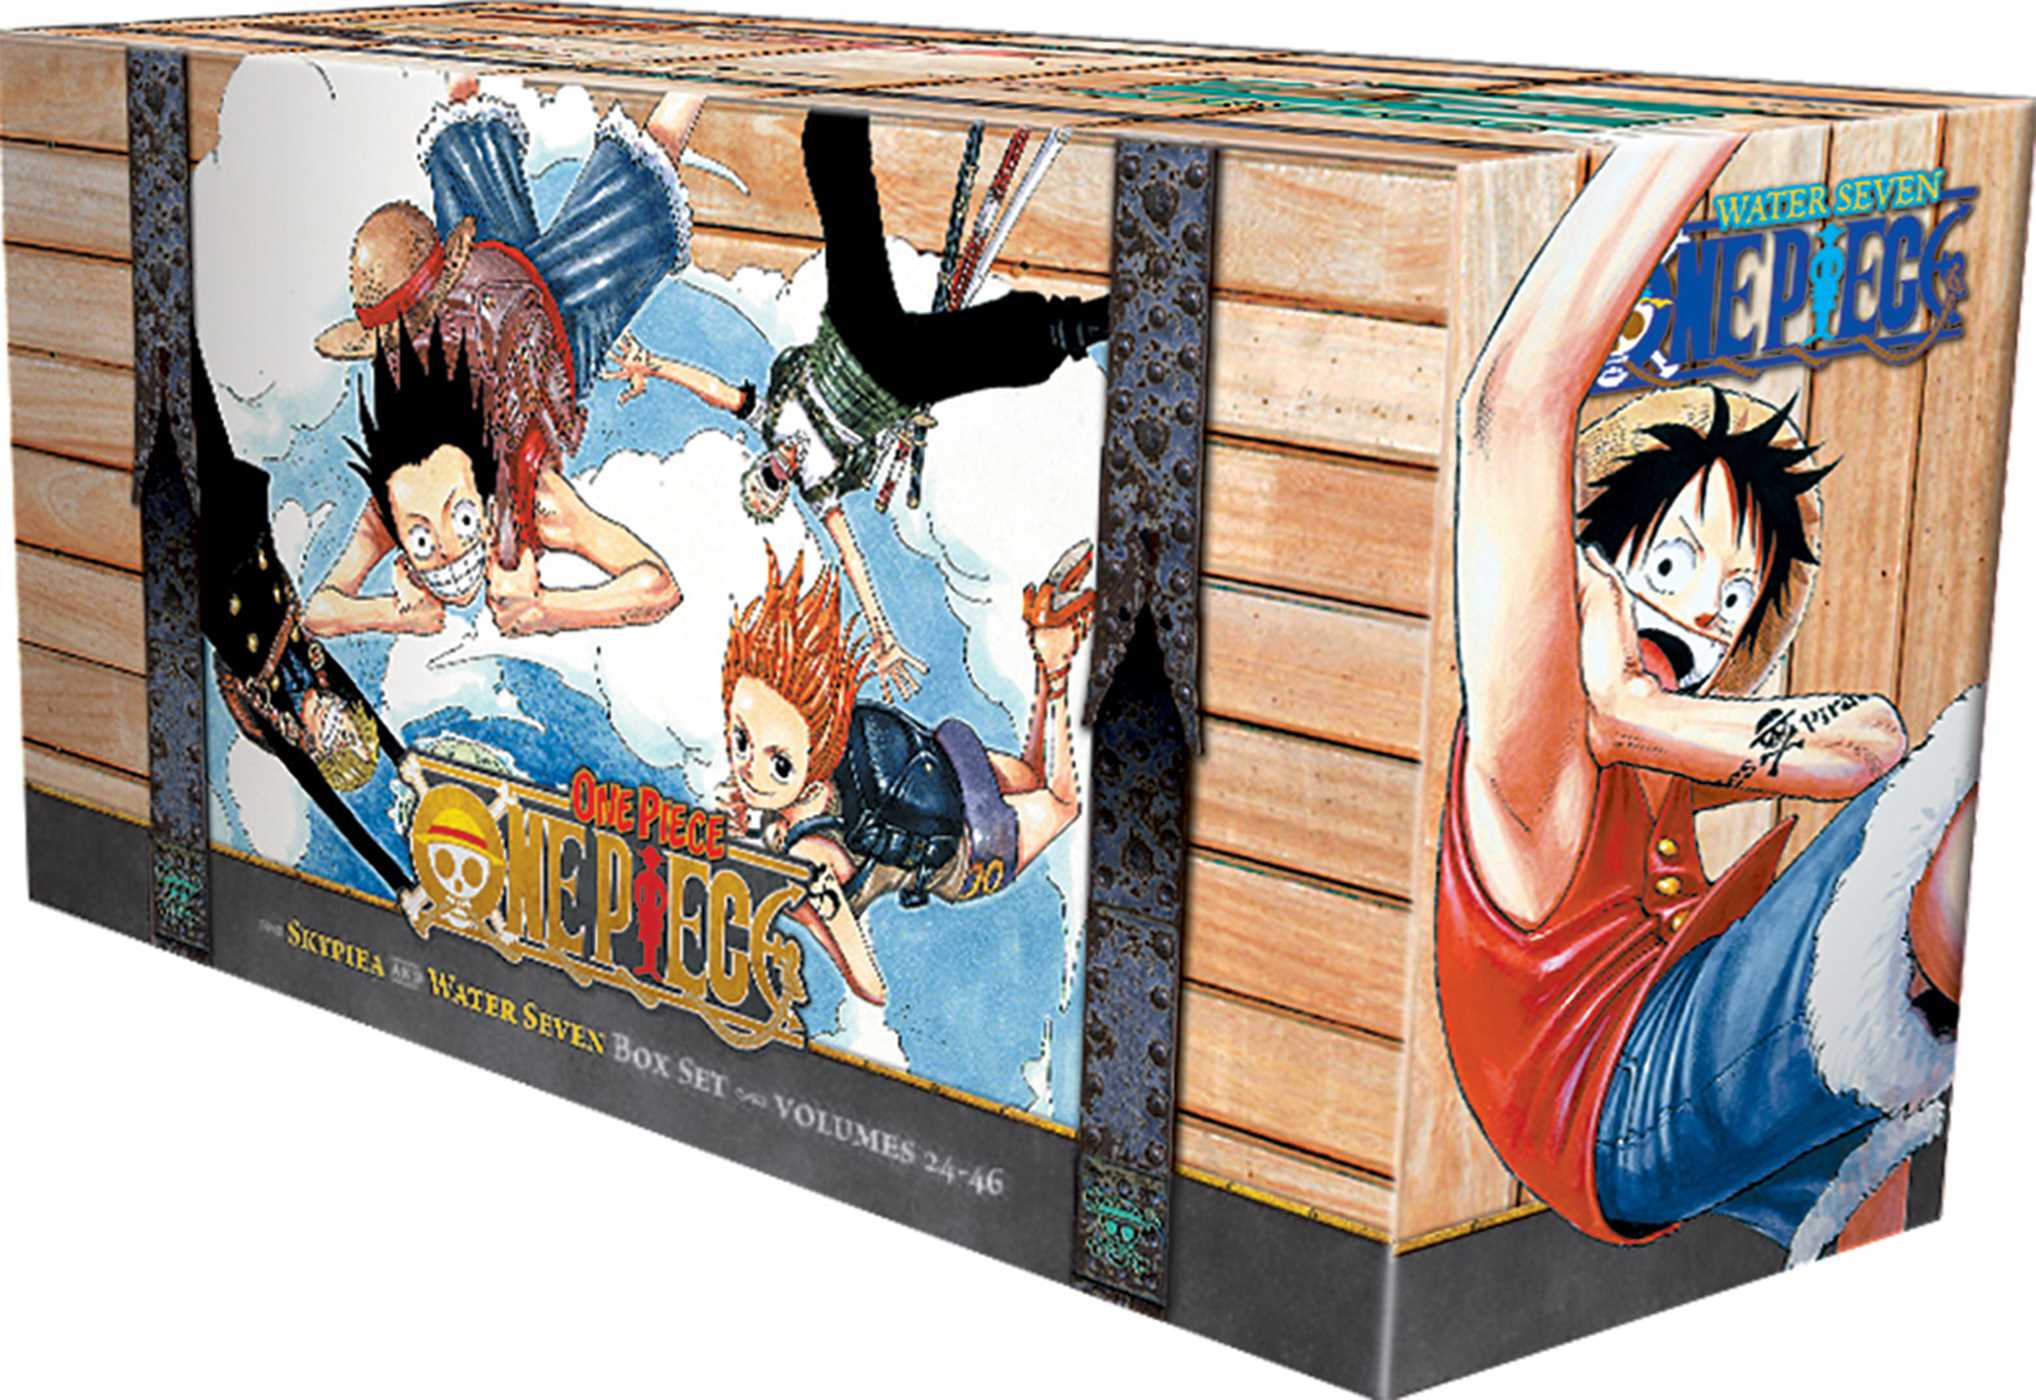 One Piece Box Set 2: Skypeia and Water Seven (Volumes 24-46)